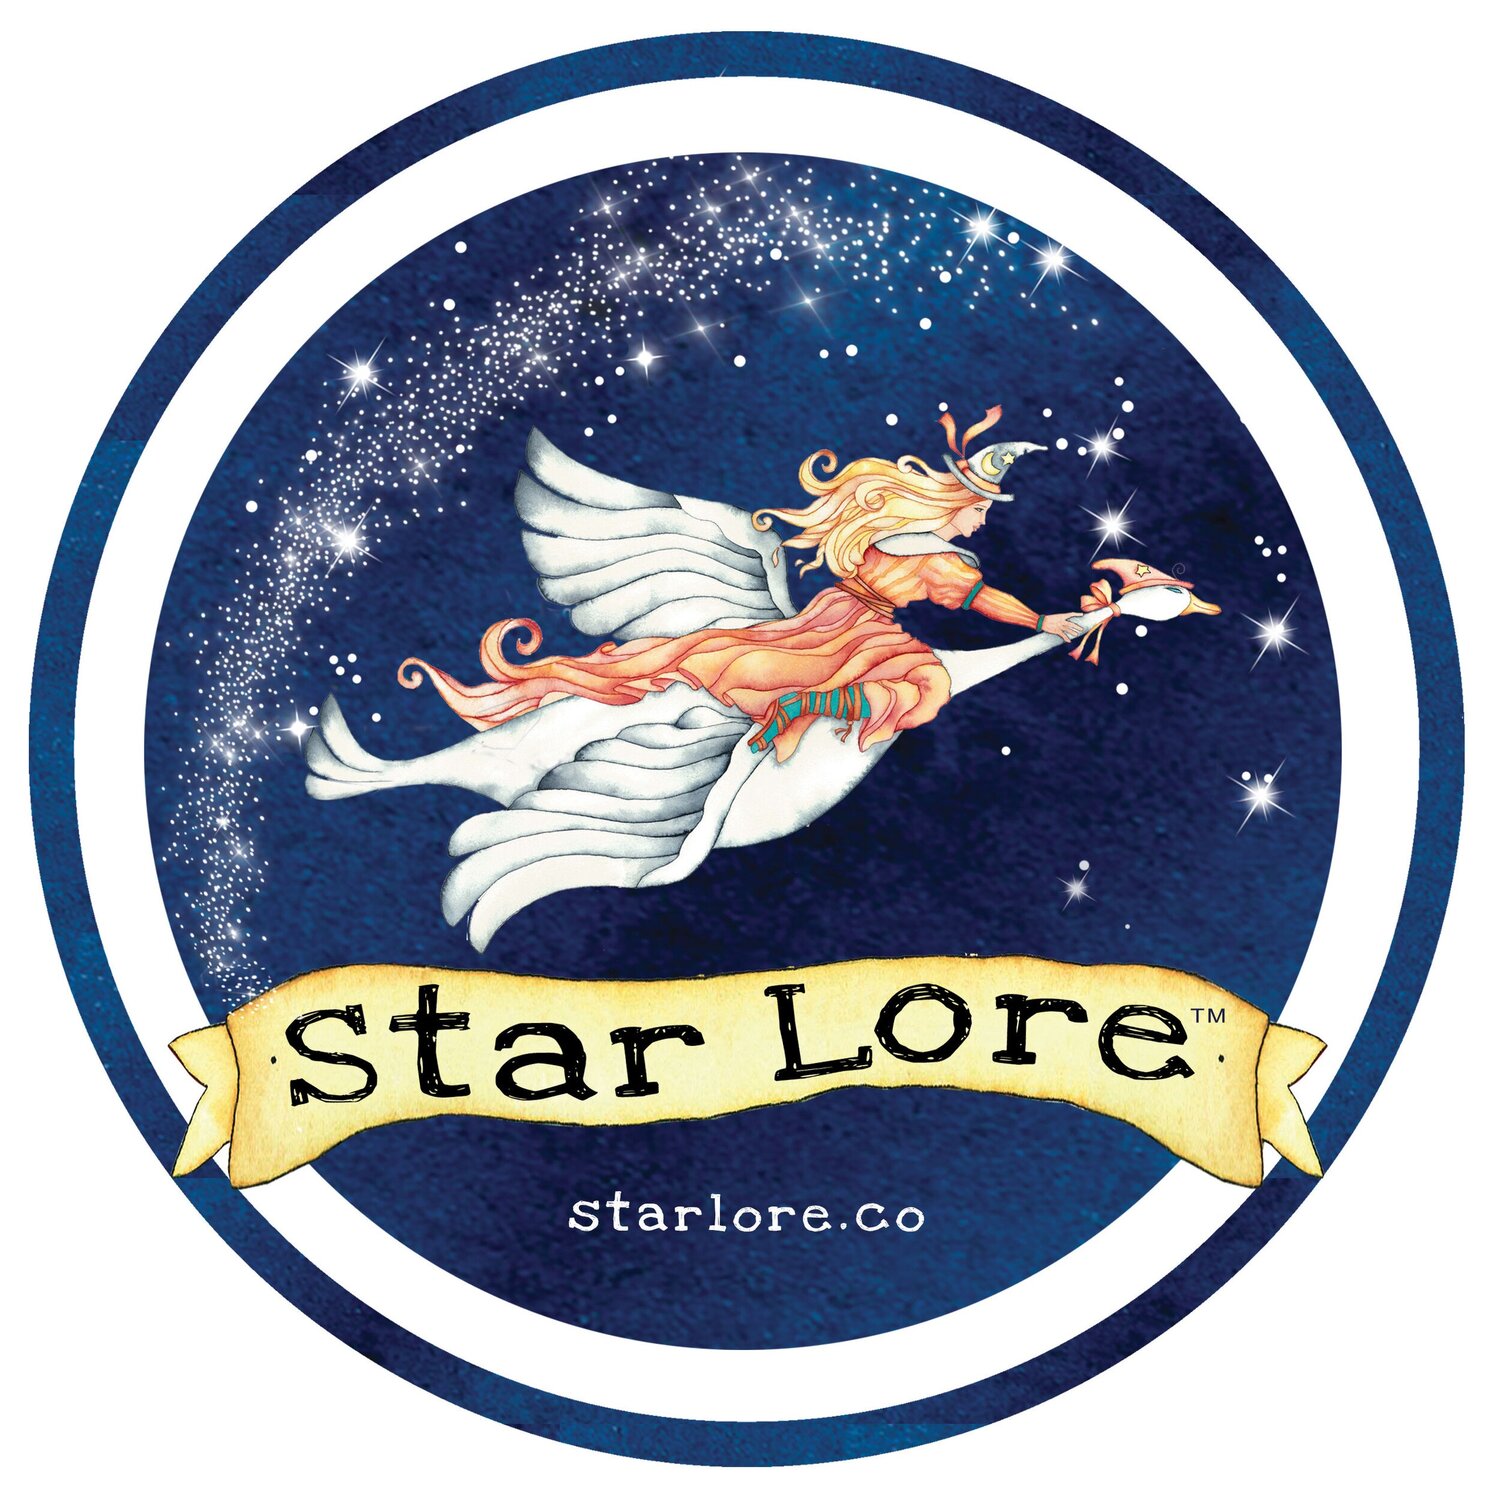 Star Lore